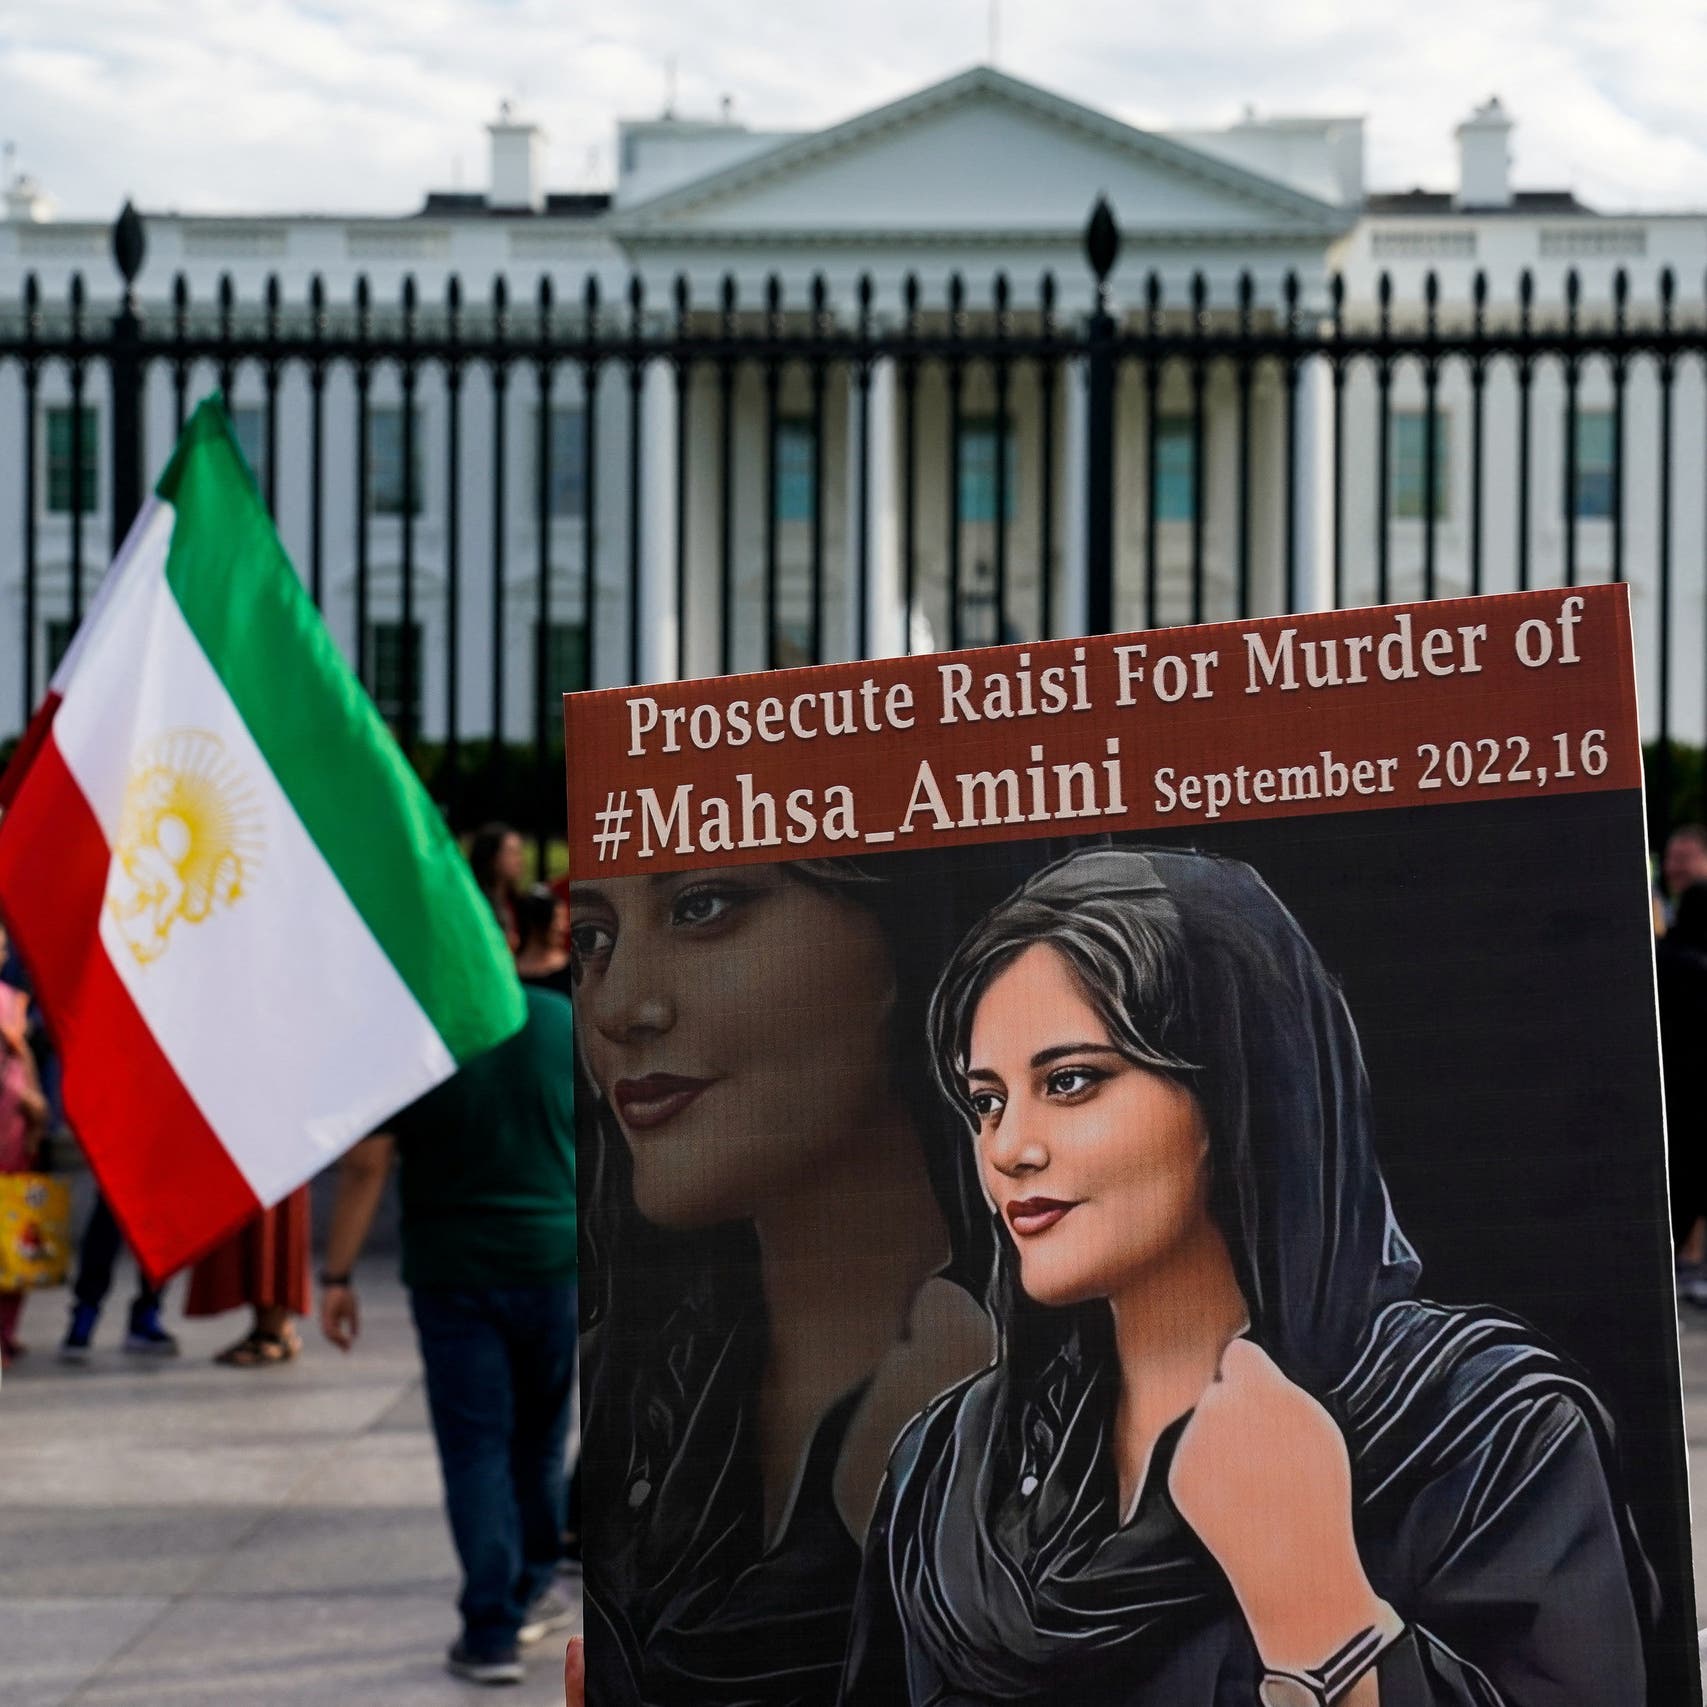 Iran places Mahsa Amini’s family under house arrest: Report